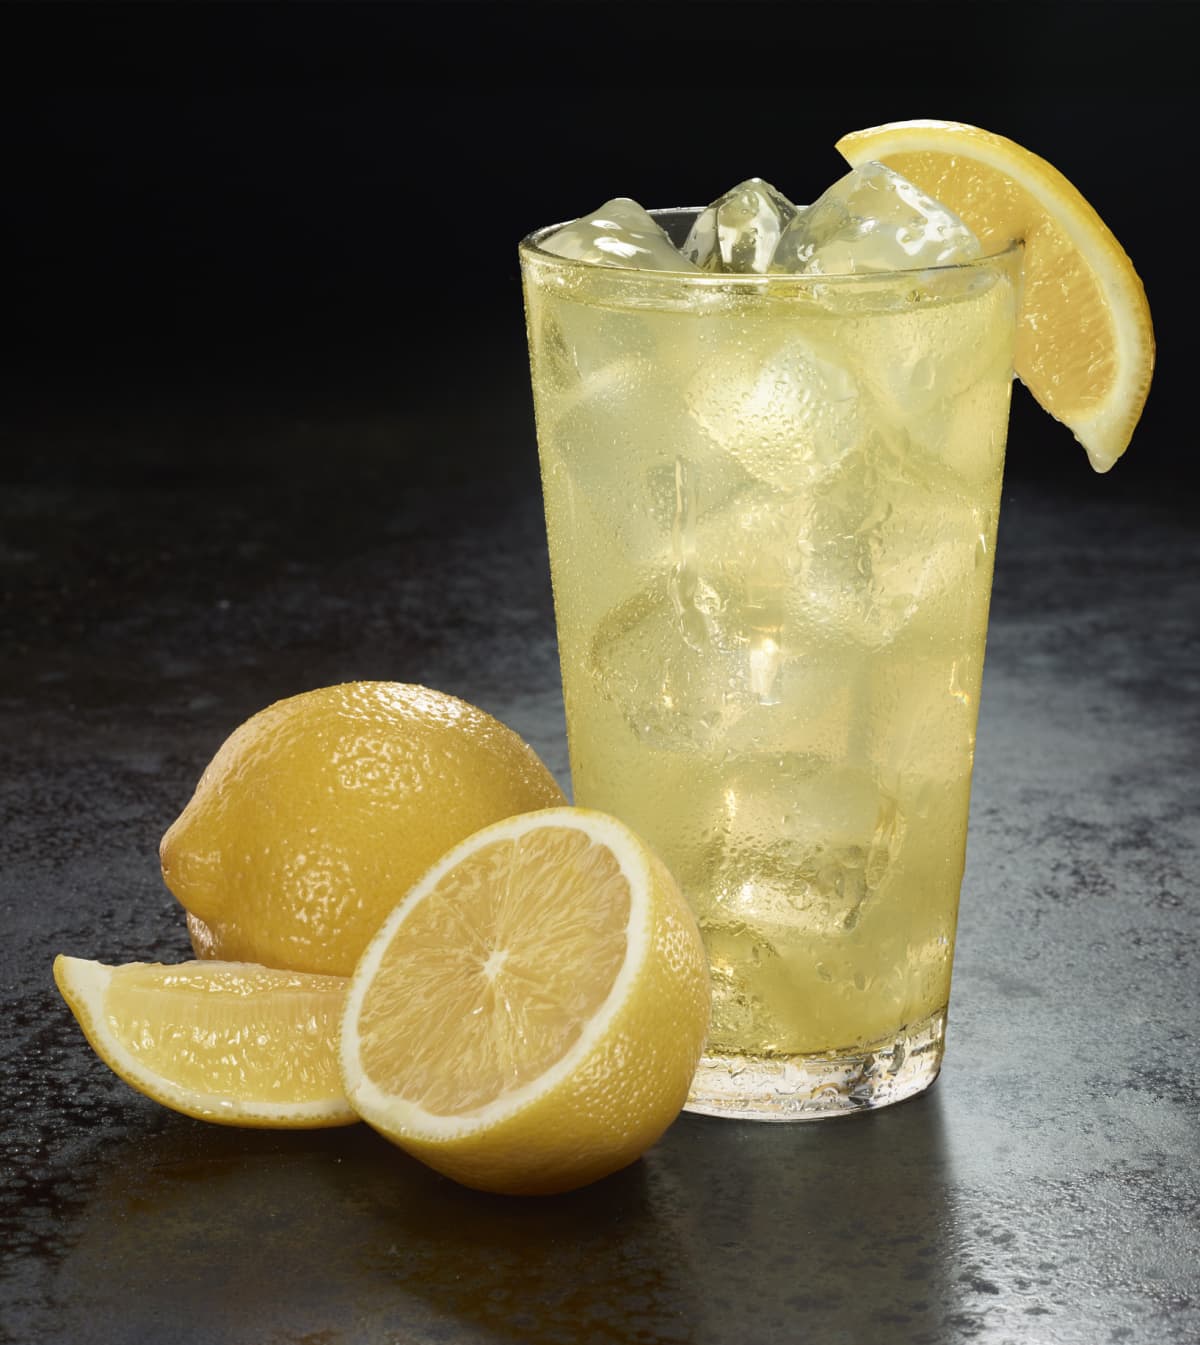 Iced lemonade with lemons against a dark background.